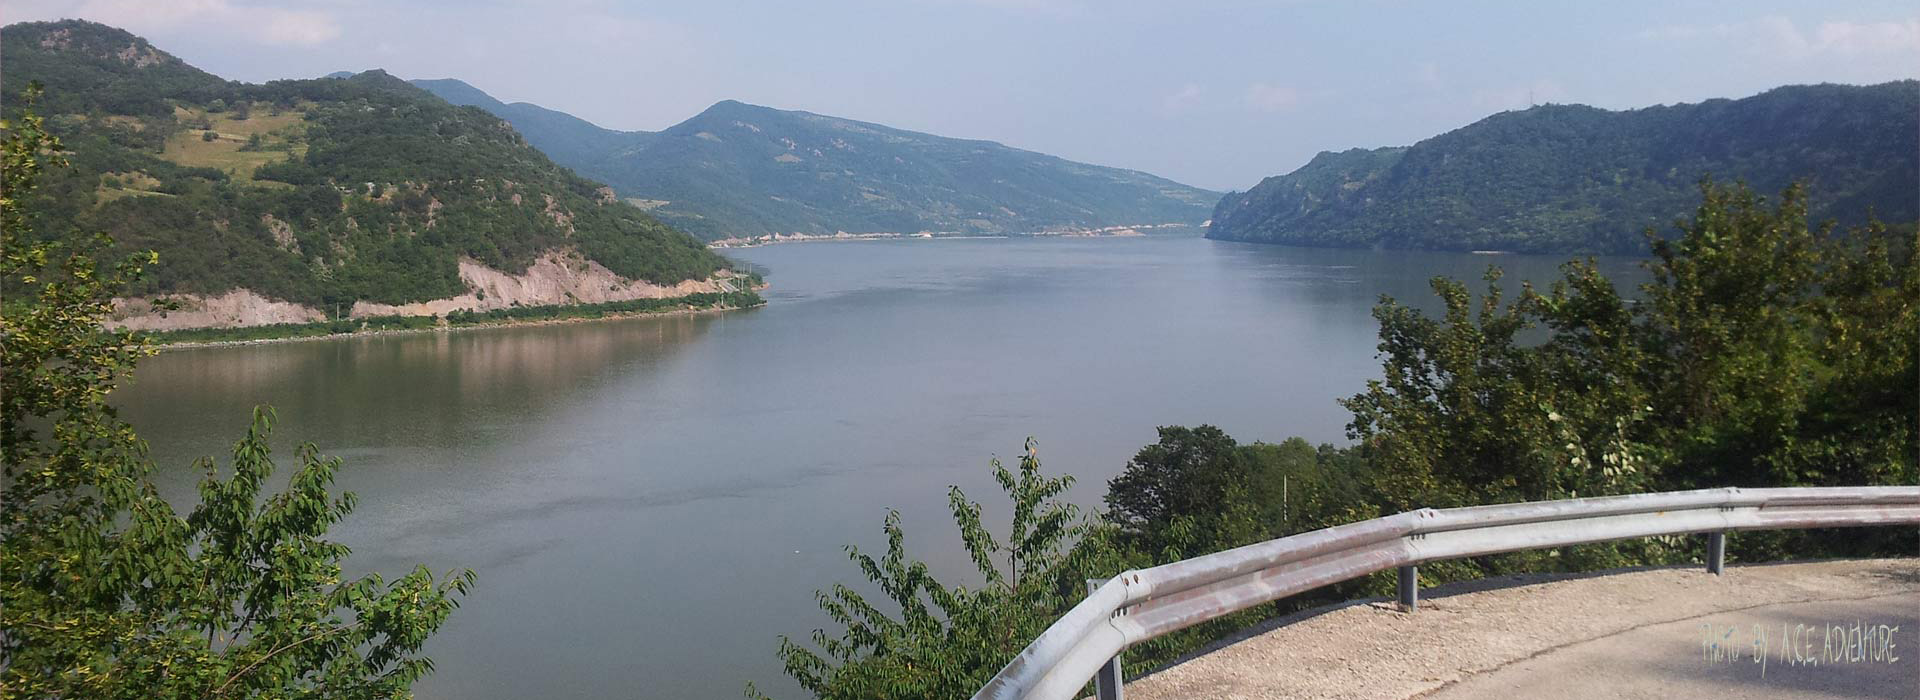 Danube Guided Cycling Holiday - Danube